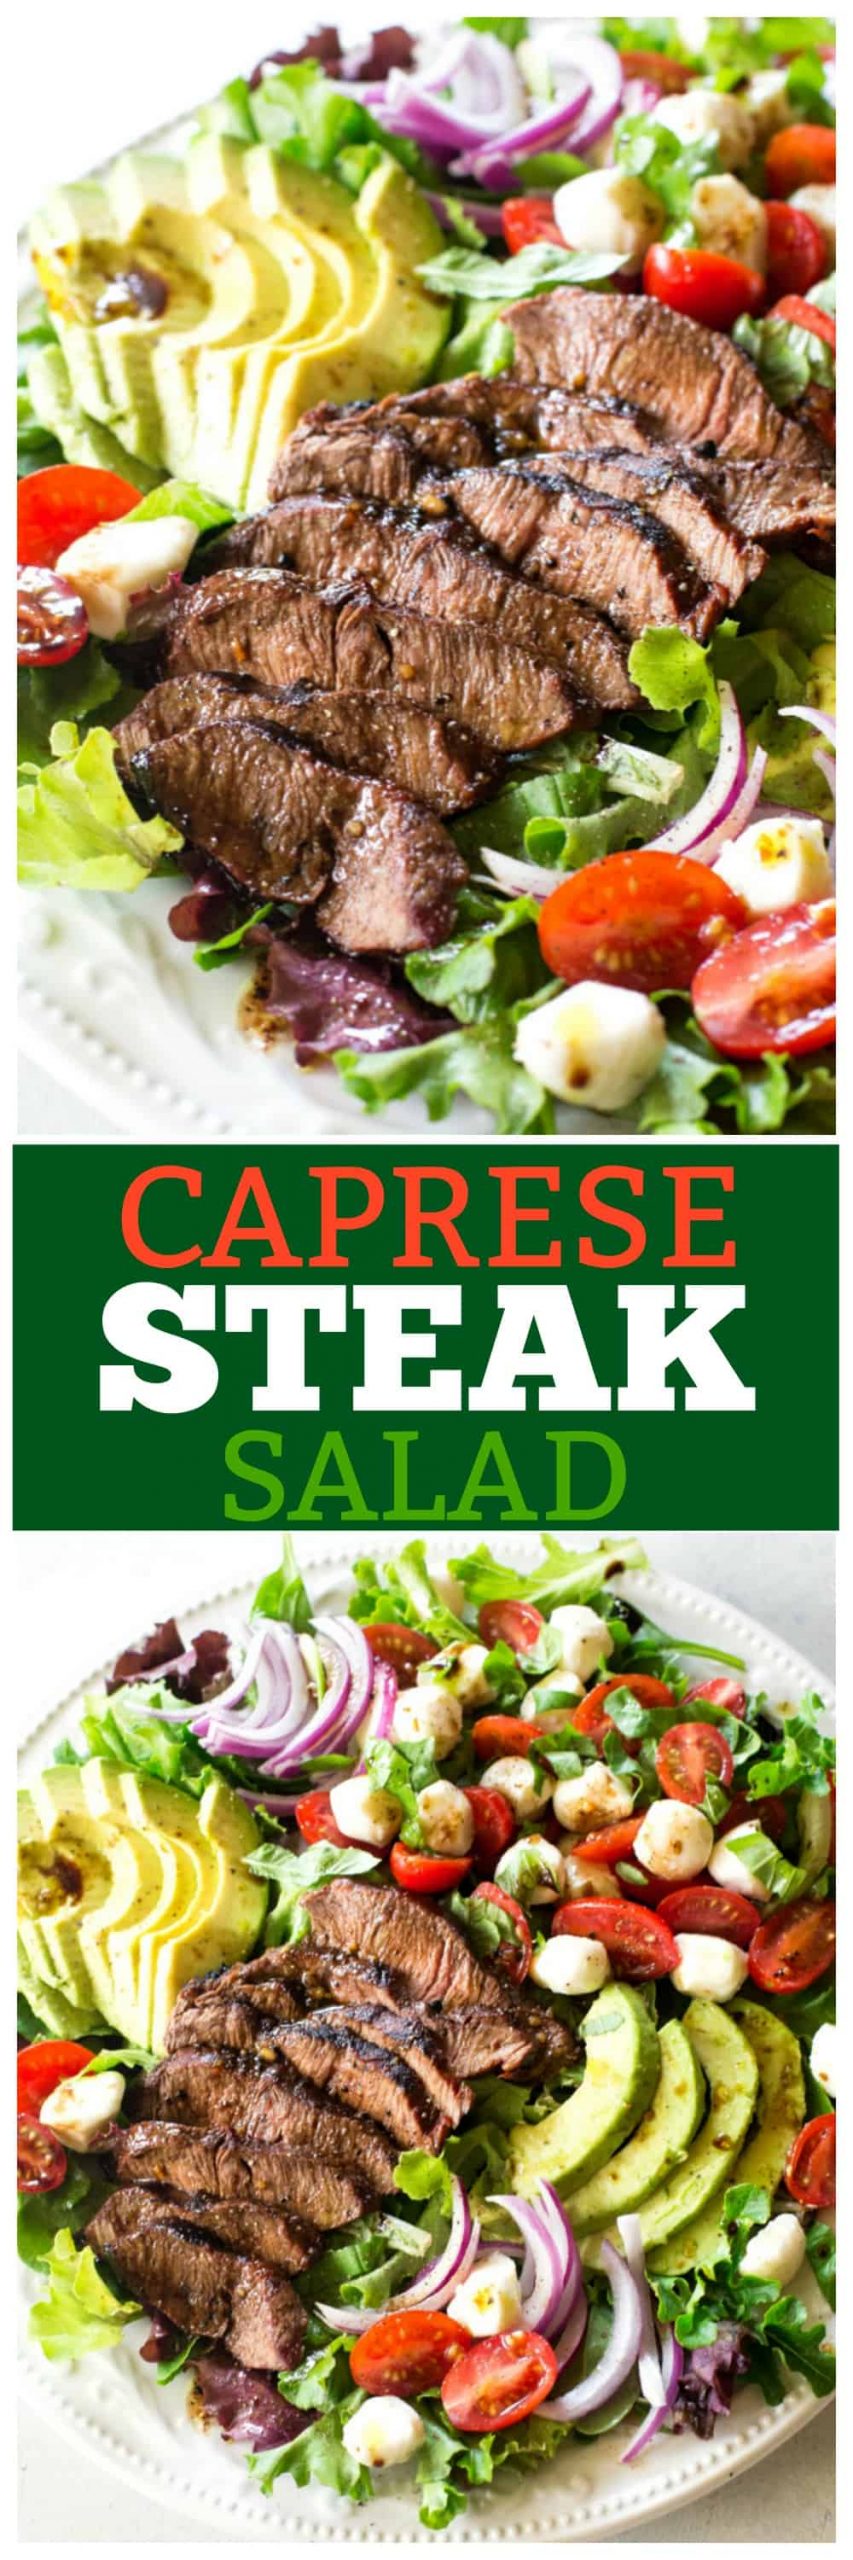 fb image scaled - Caprese Steak Salad